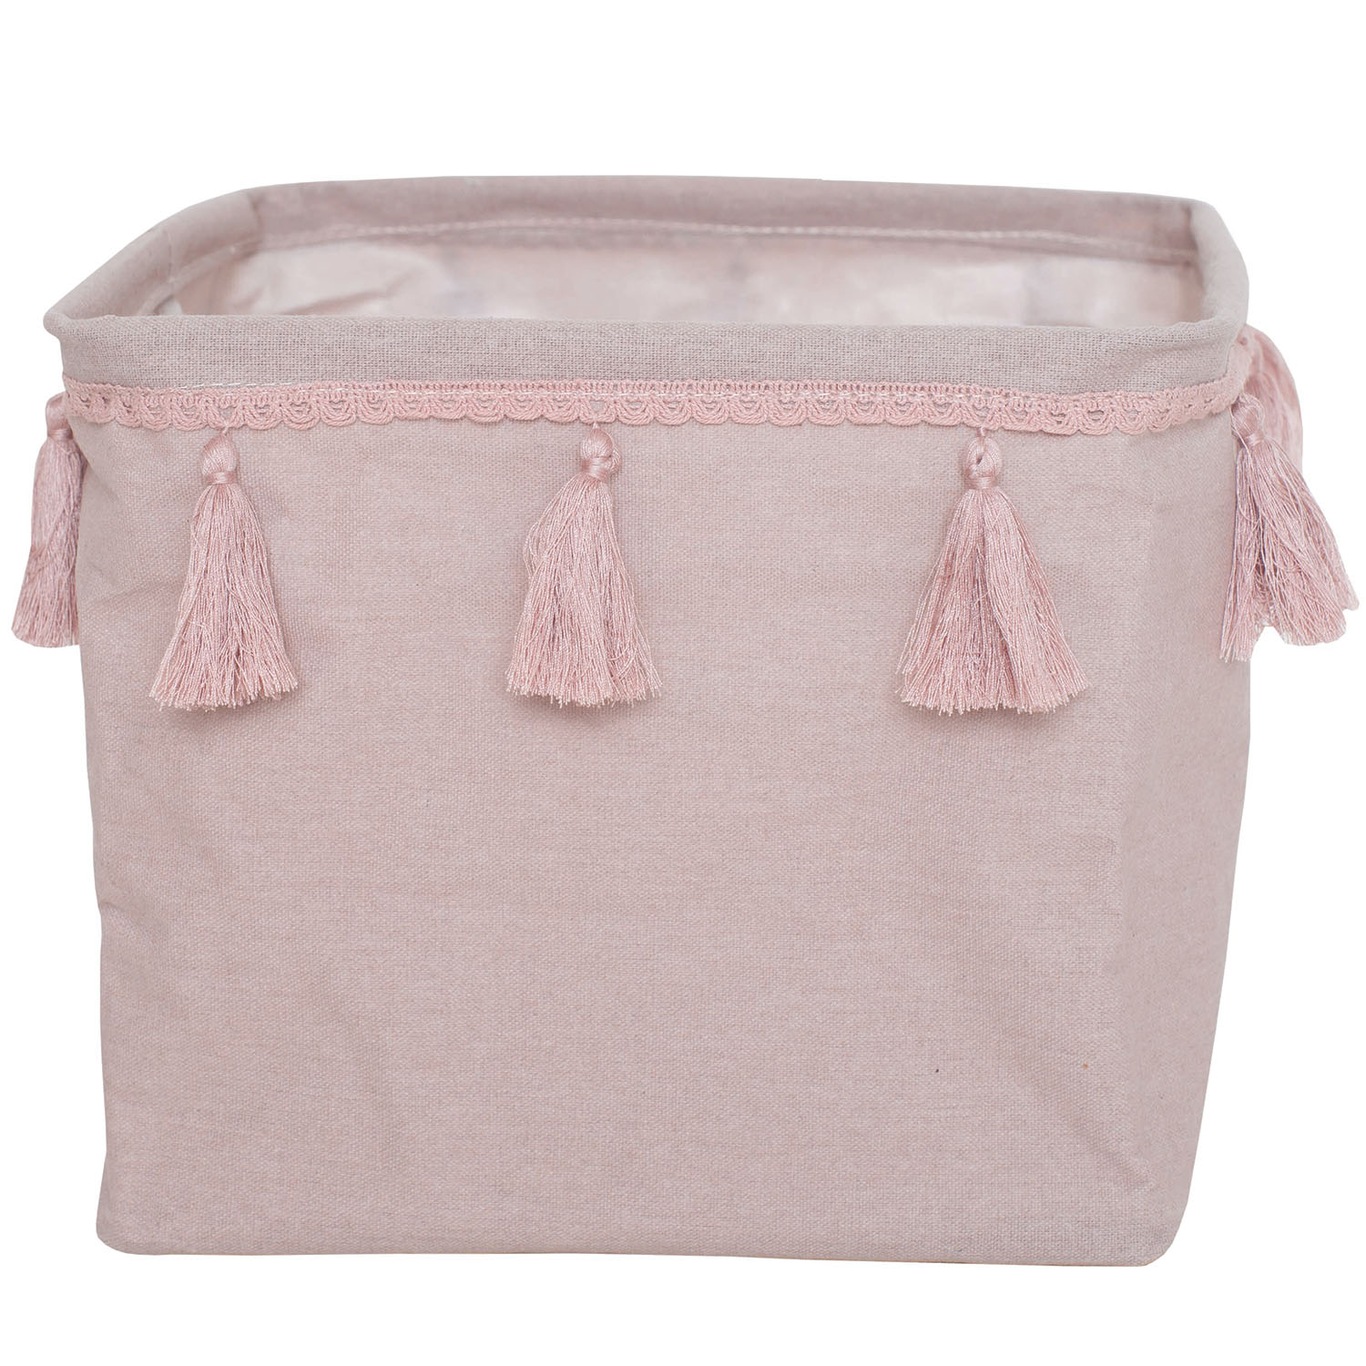 Storage basket small, Pink